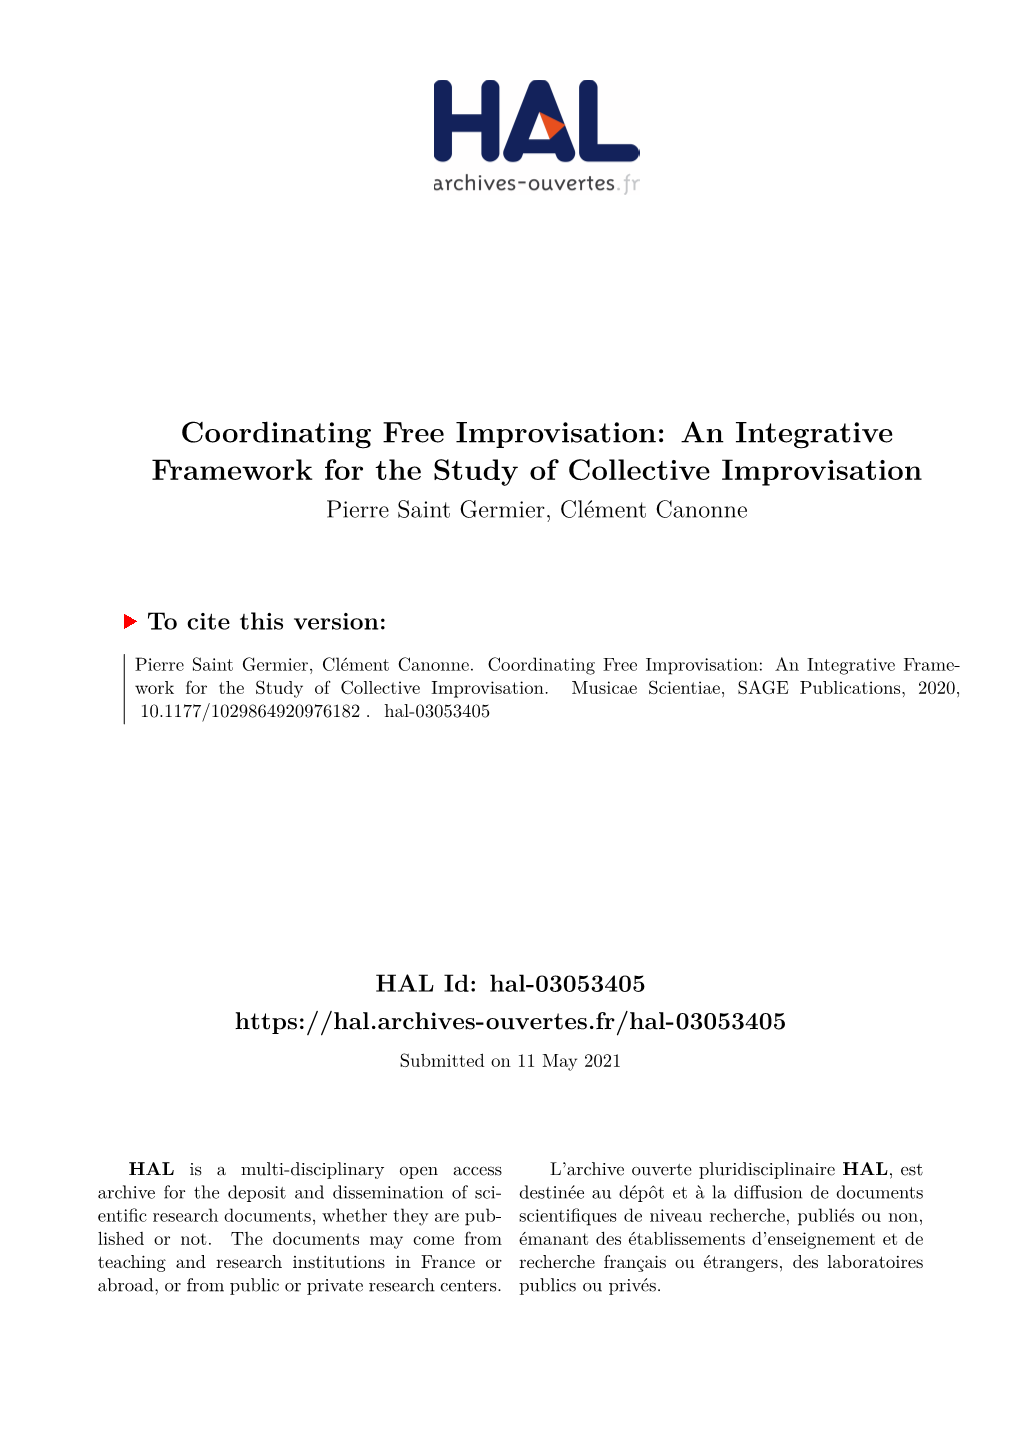 Coordinating Free Improvisation: an Integrative Framework for the Study of Collective Improvisation Pierre Saint Germier, Clément Canonne